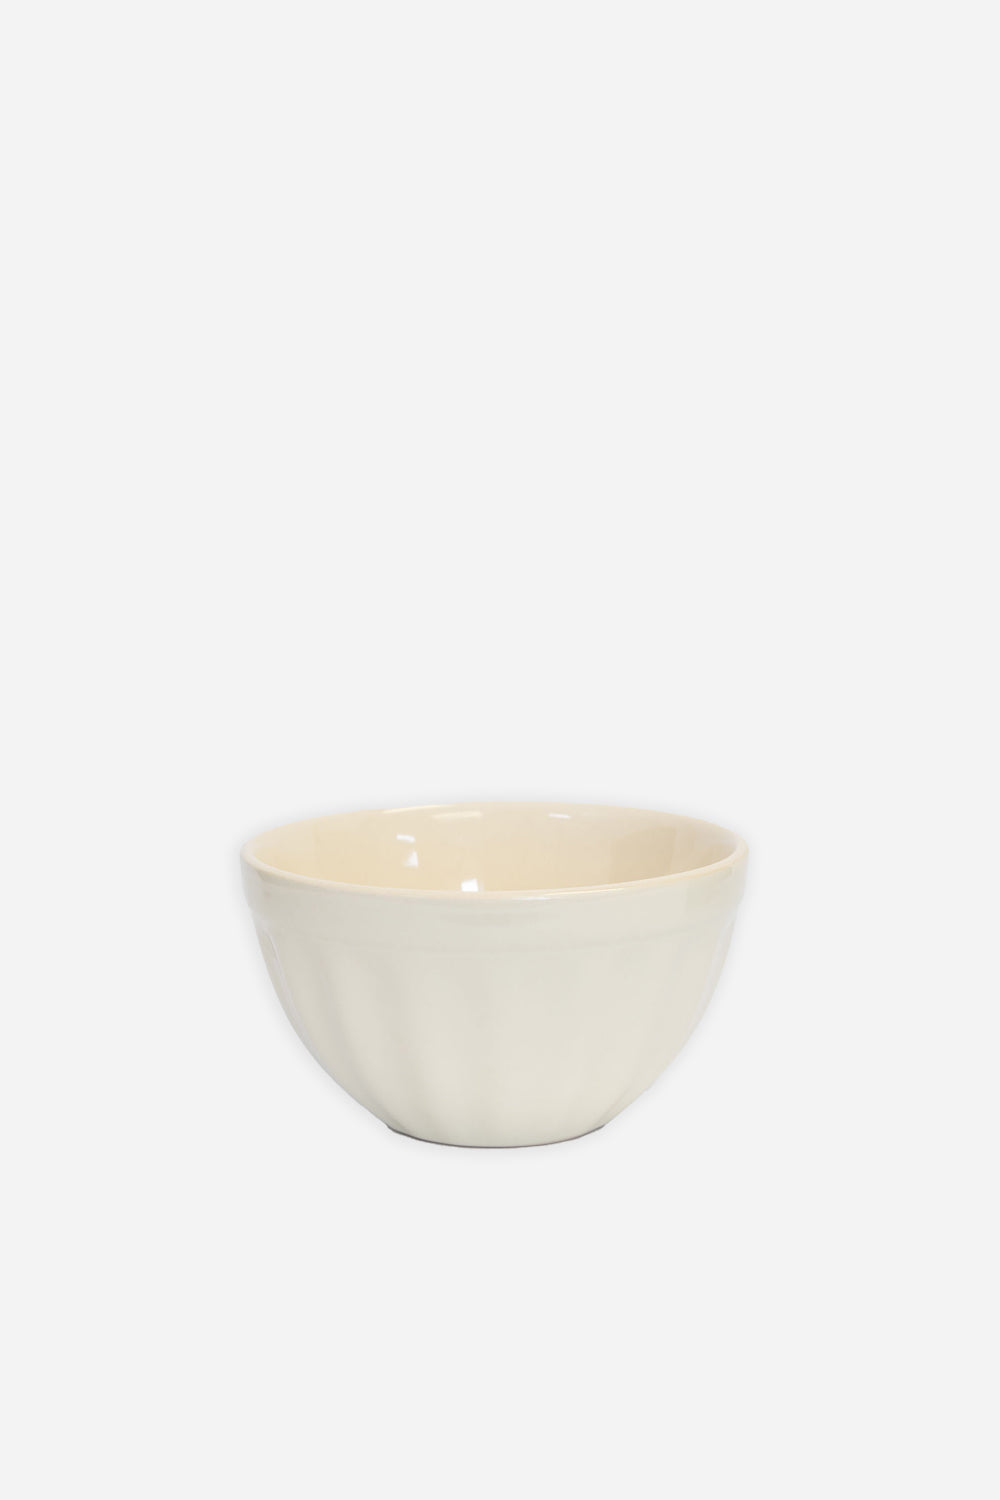 cream stoneware cereal breakfast bowl